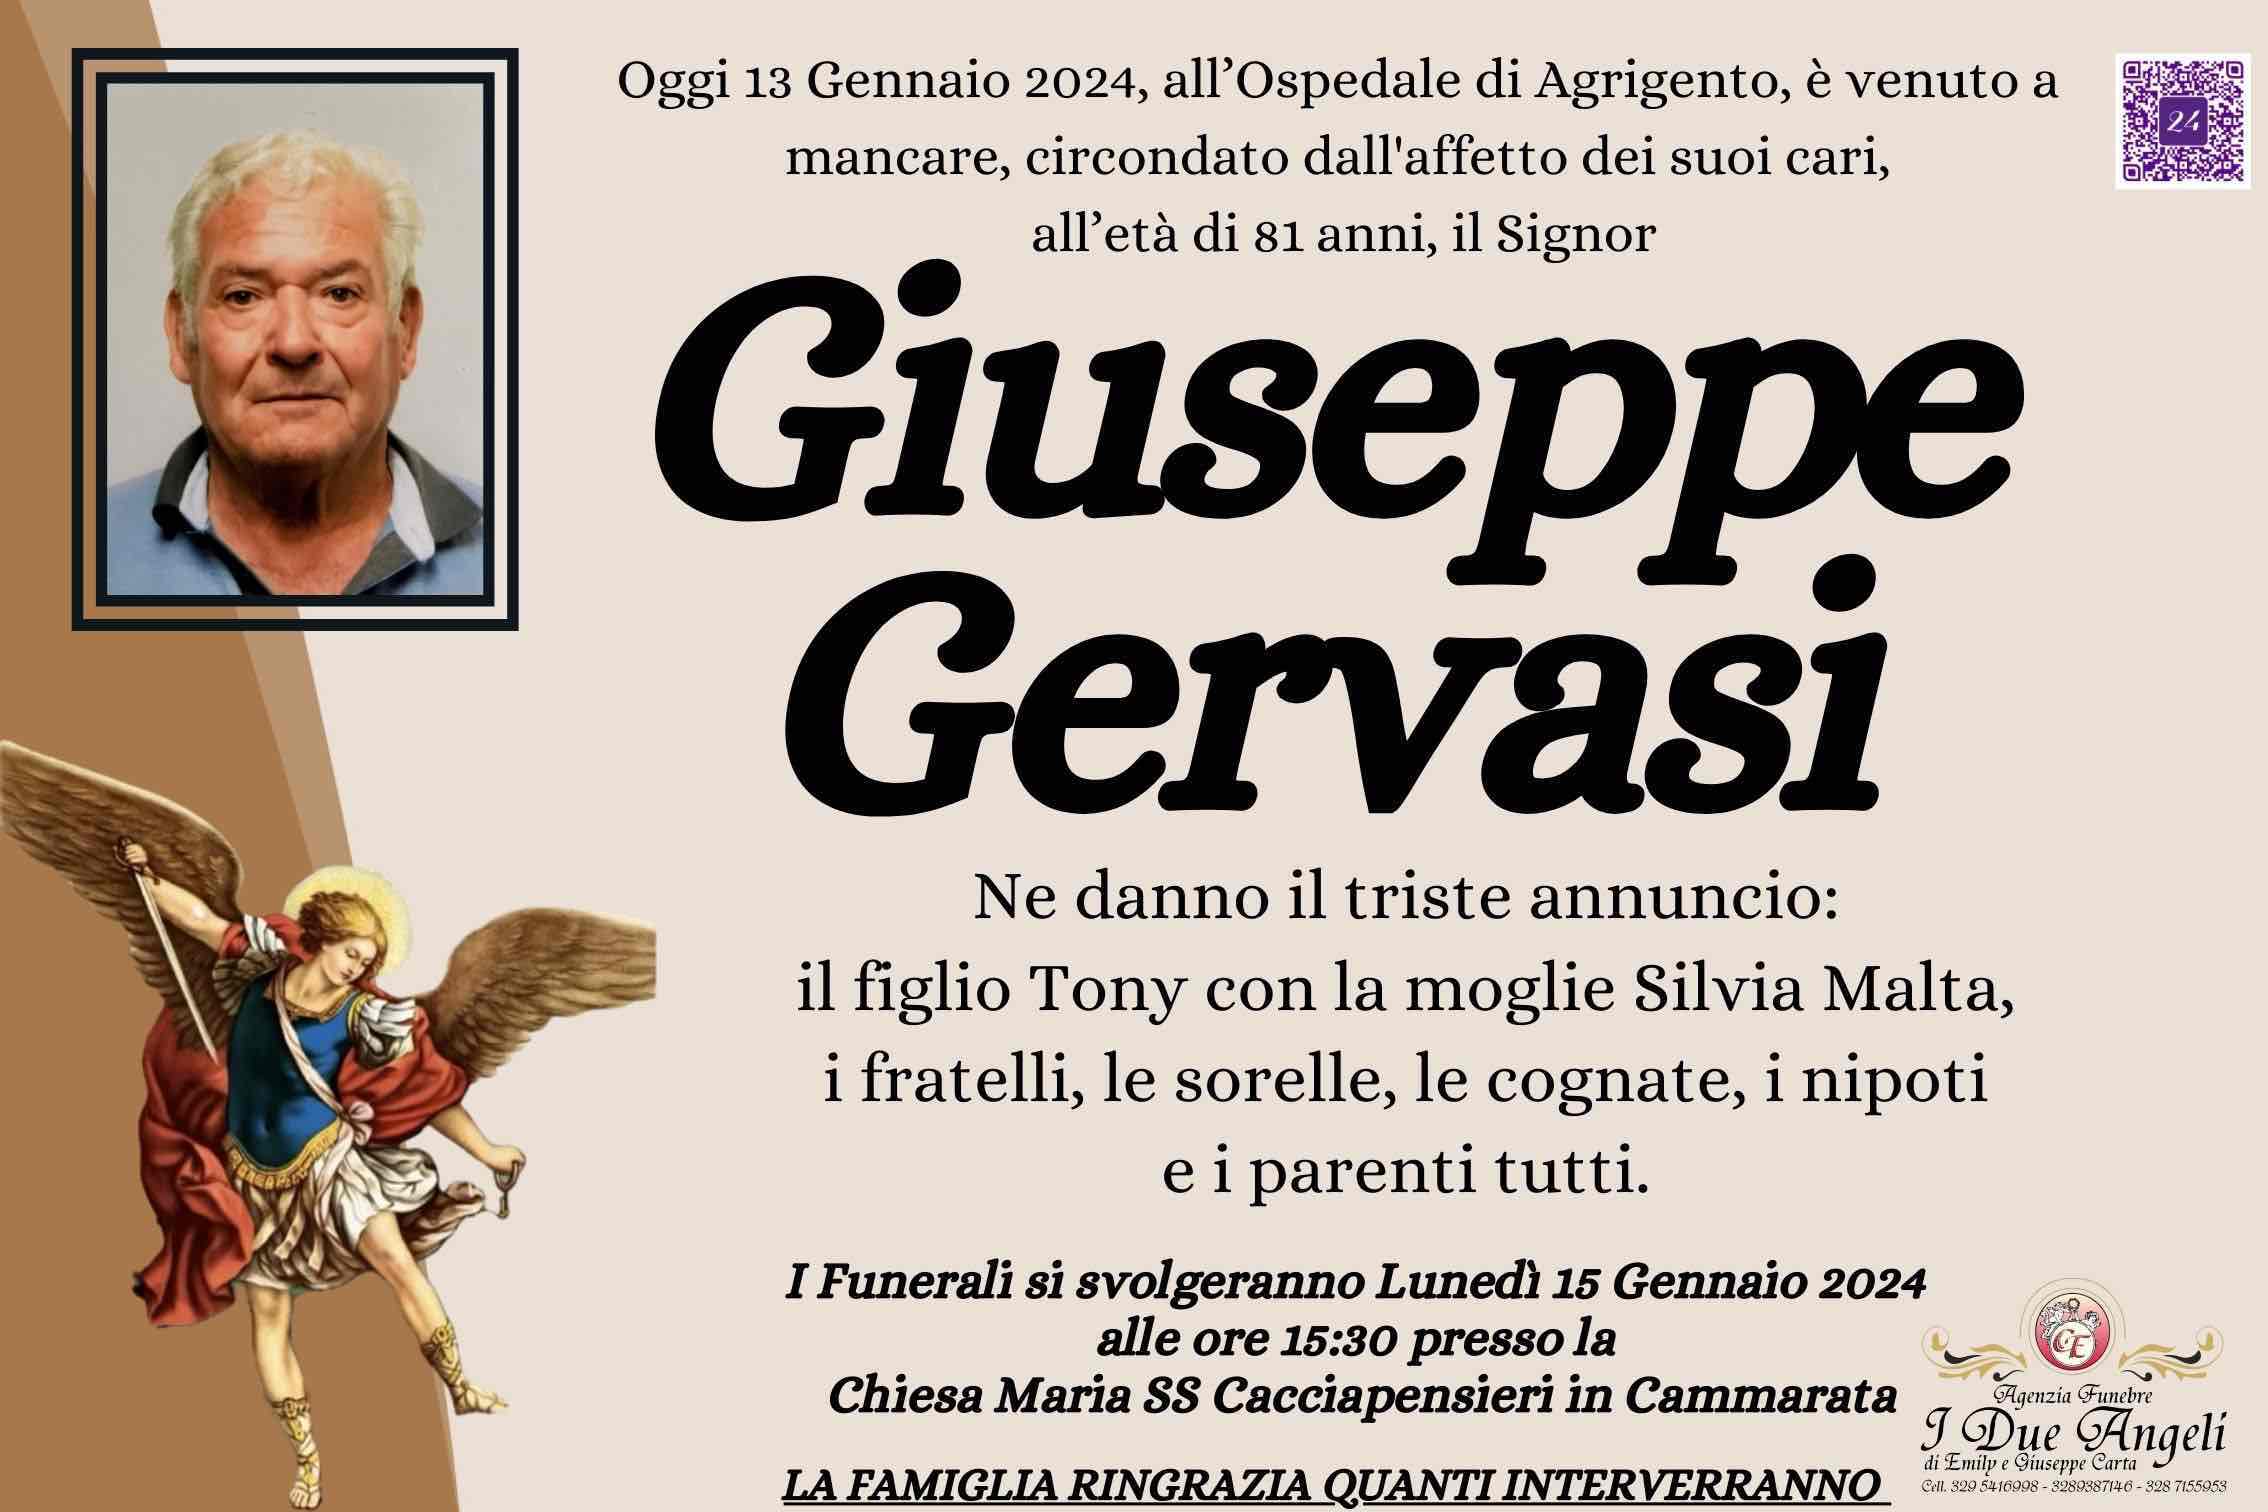 Giuseppe Gervasi